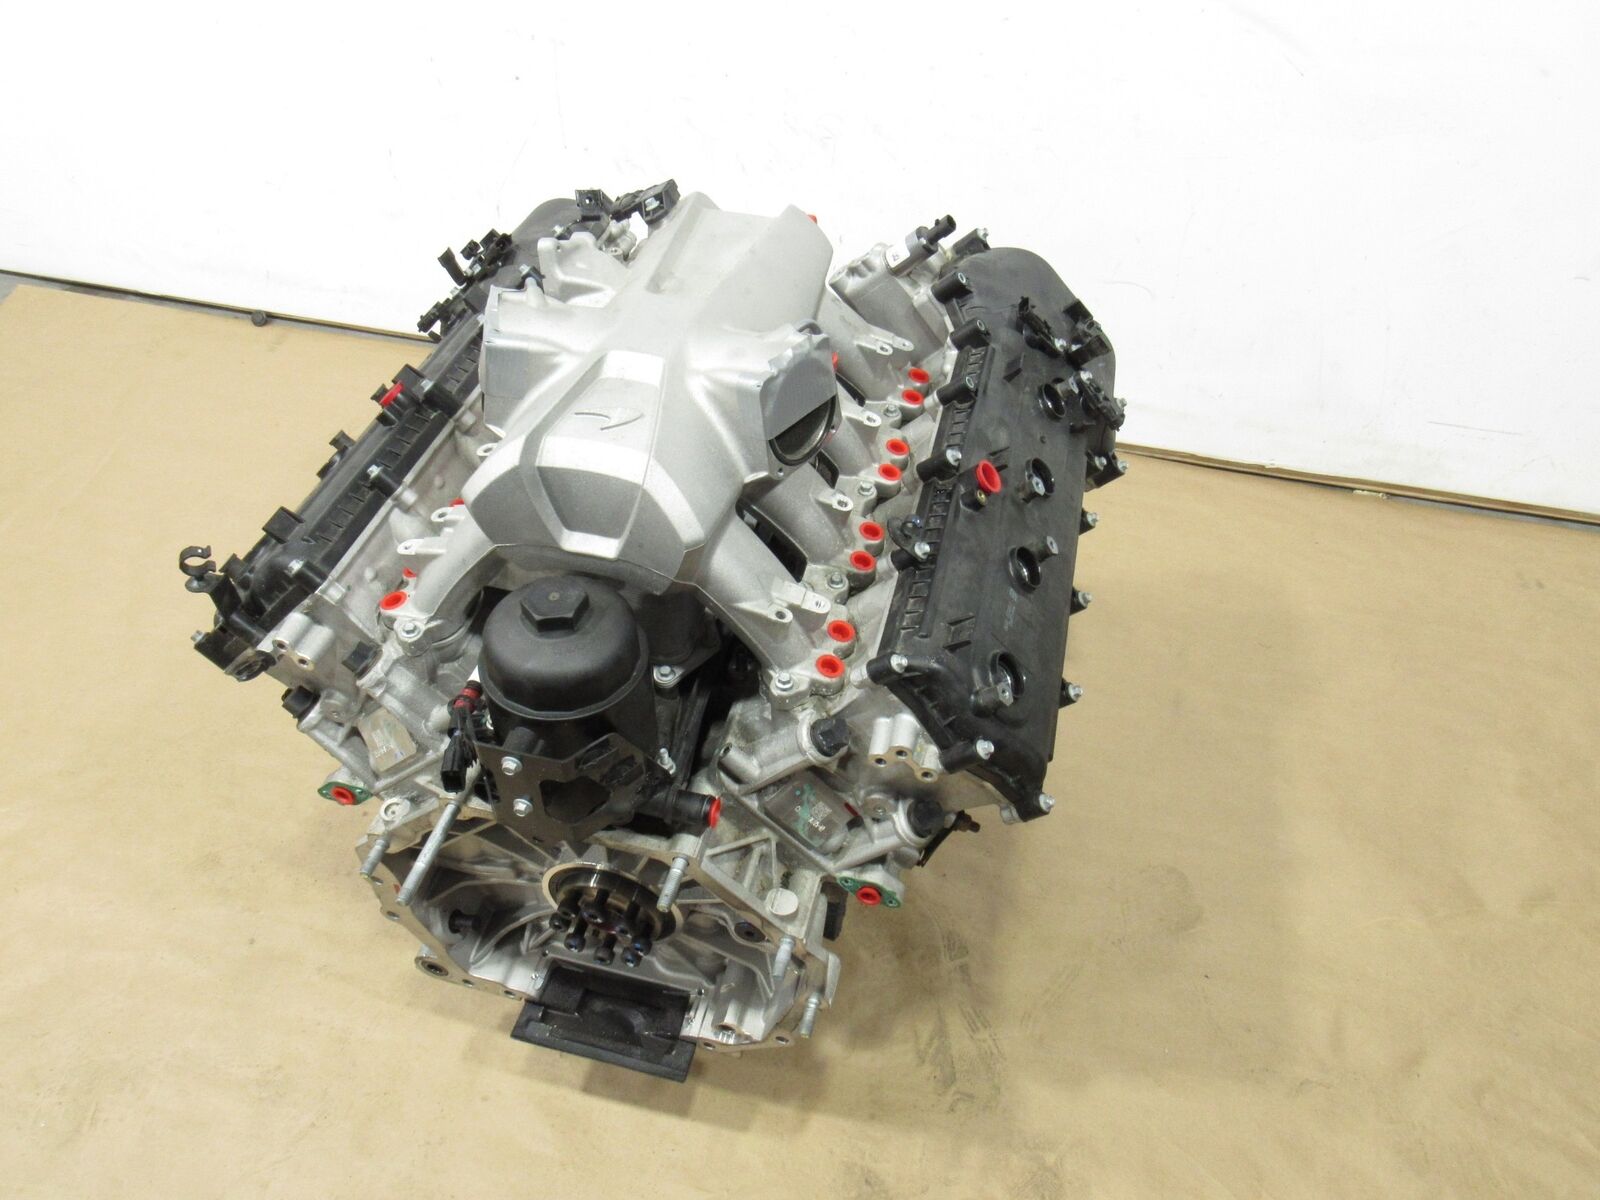 Mclaren 720S 720 2020 4.0L V8 Twin Turbo Engine Motor 19086 Miles 17 - 20 ;@2